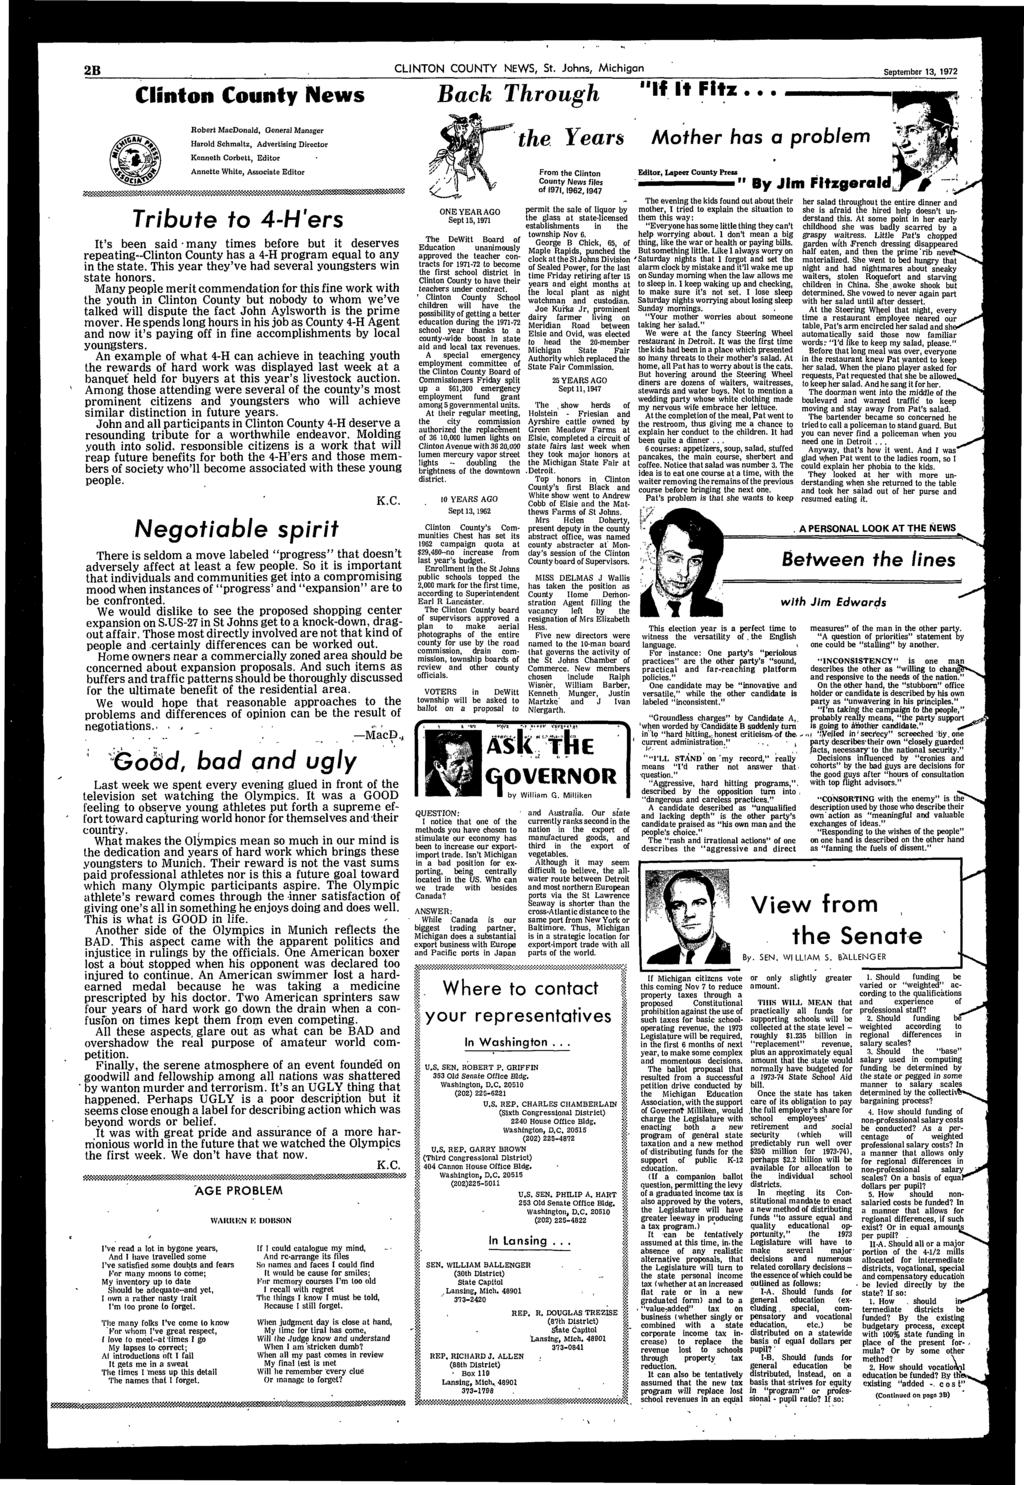 2B CLINTON COUNTY NEWS, St. Johns, Michigan September 13, 1972 Clinton County News Back Through "If It Fitz.